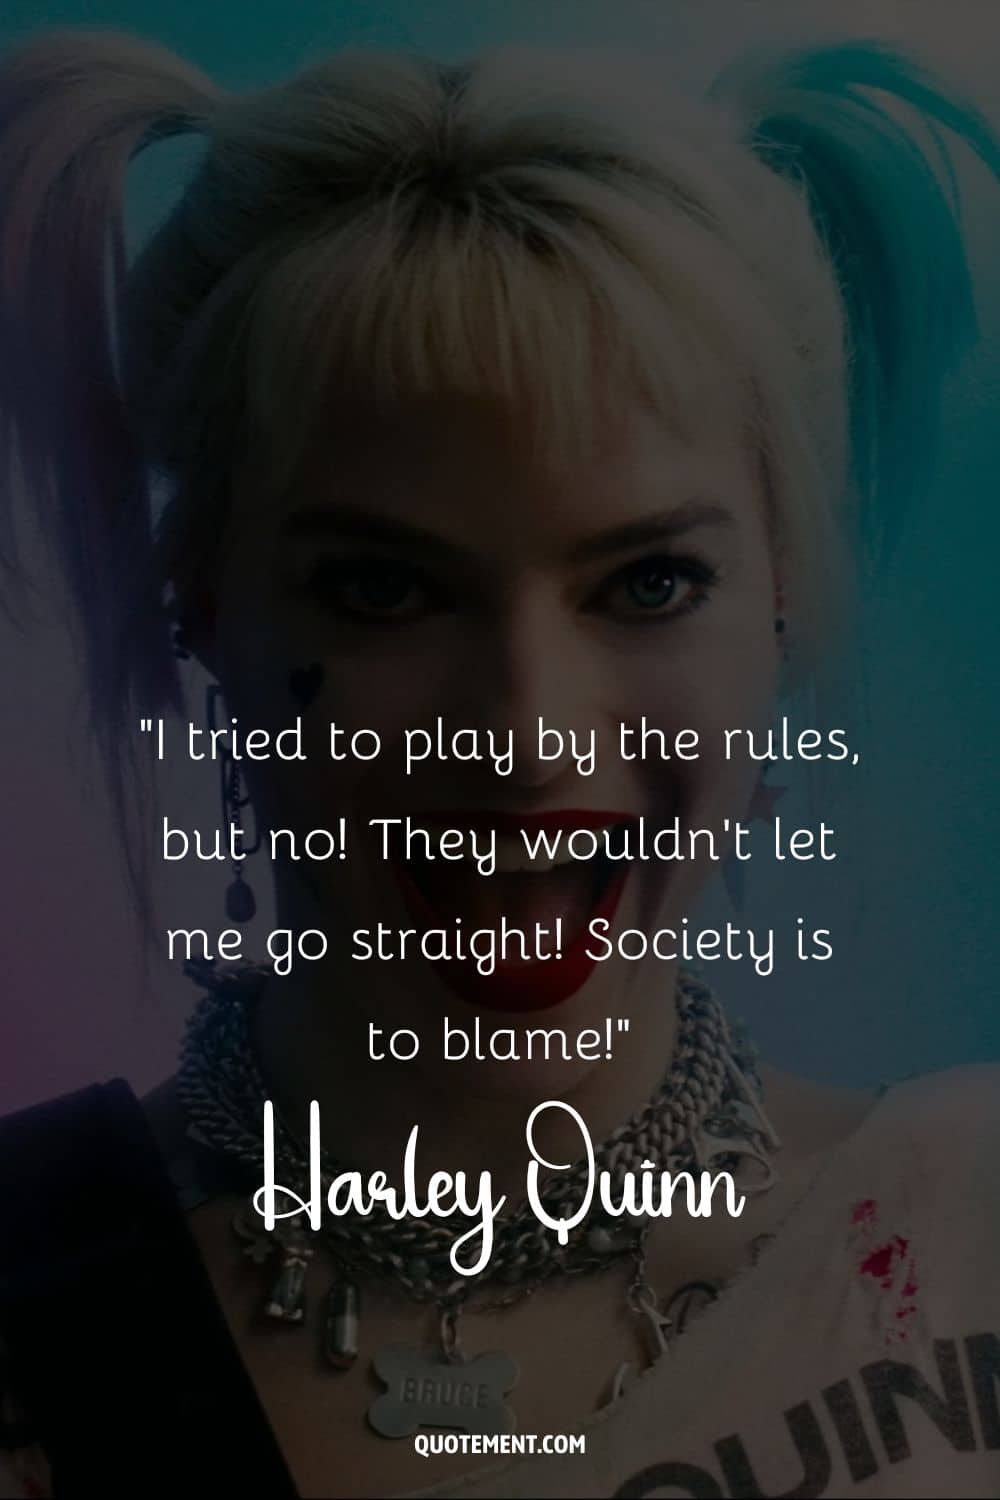 Harley Quinn, the clown princess of criminality.